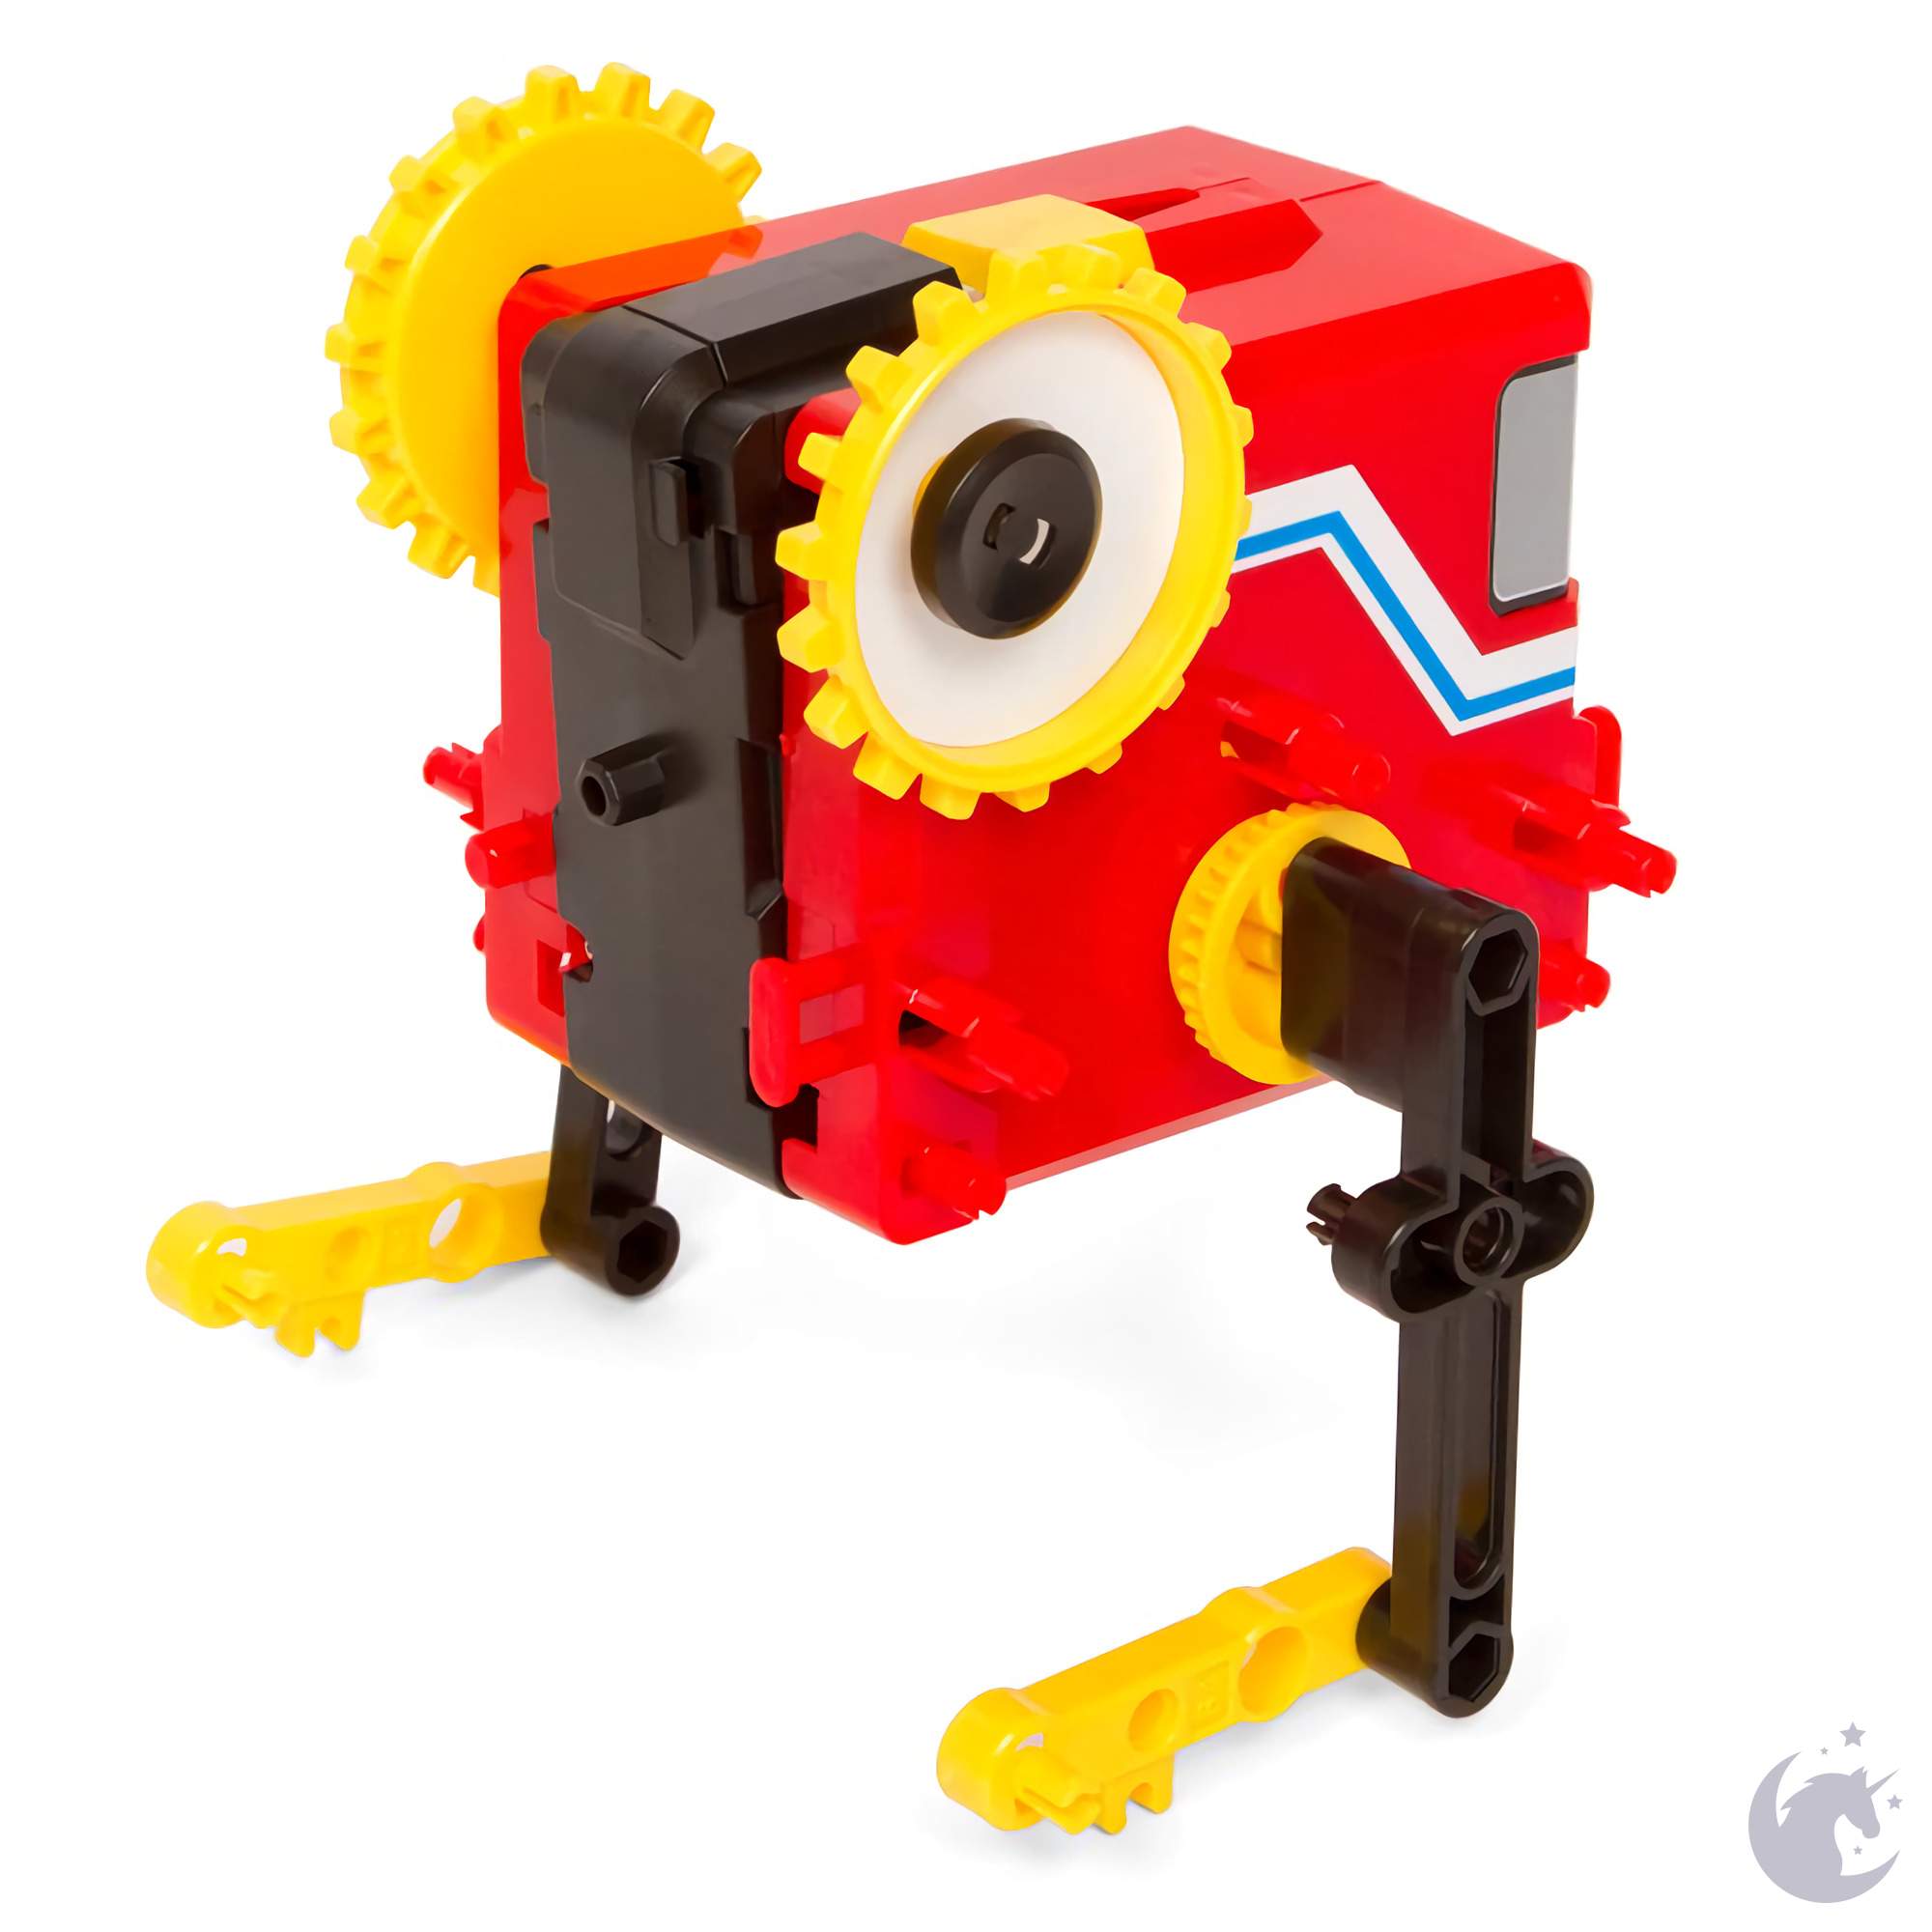 unicorntoys cic kits 4 in 1 motorized educational robot kit engineering stem toys for kids CIC21-891